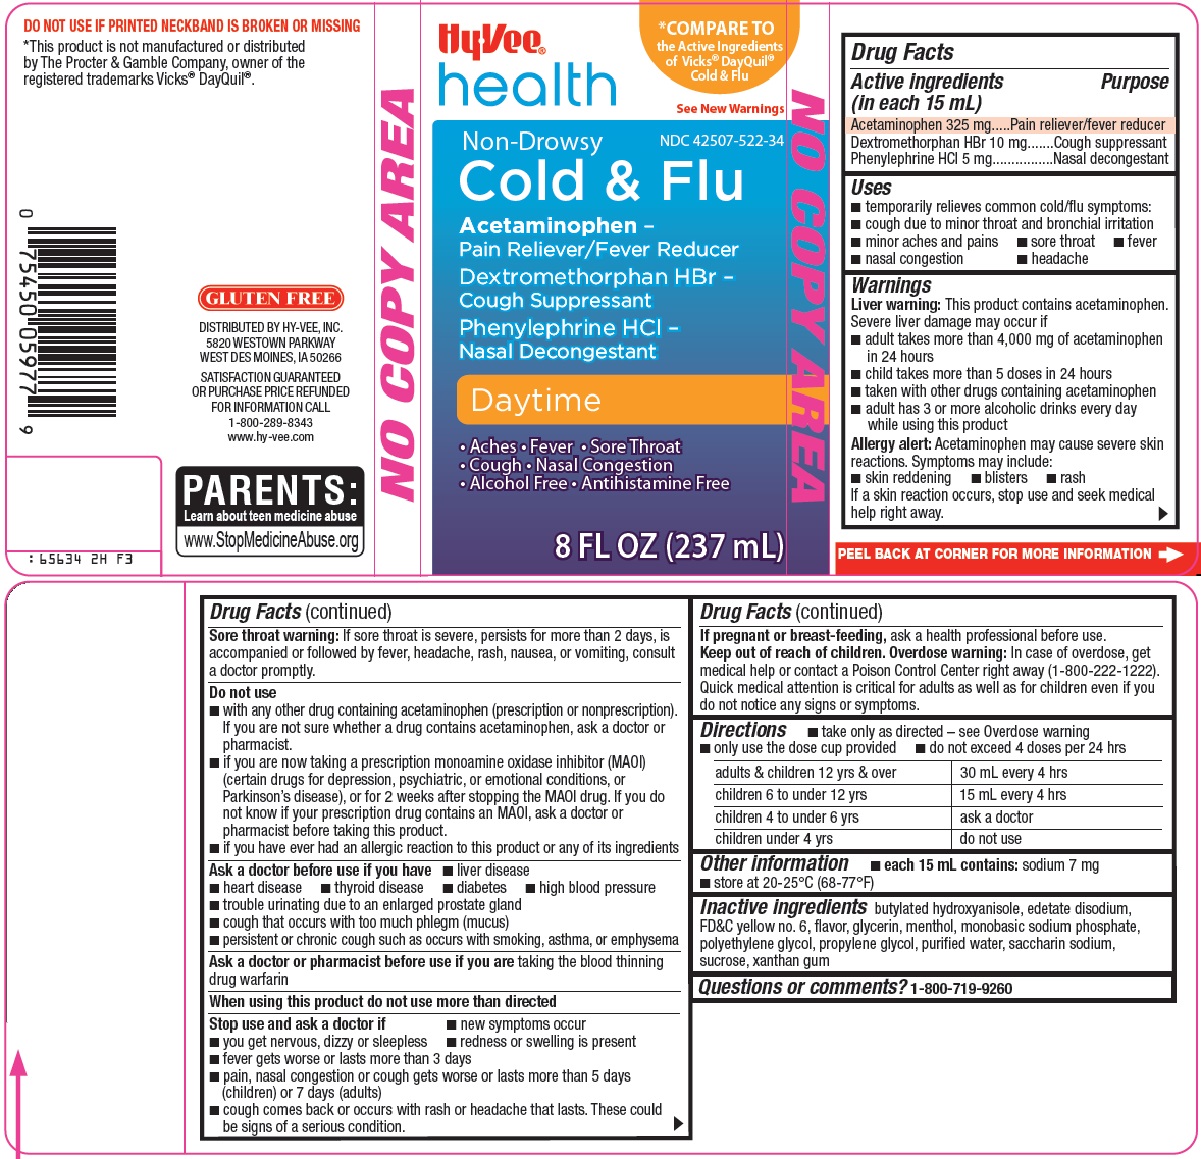 HyVee Health Cold & Flu image